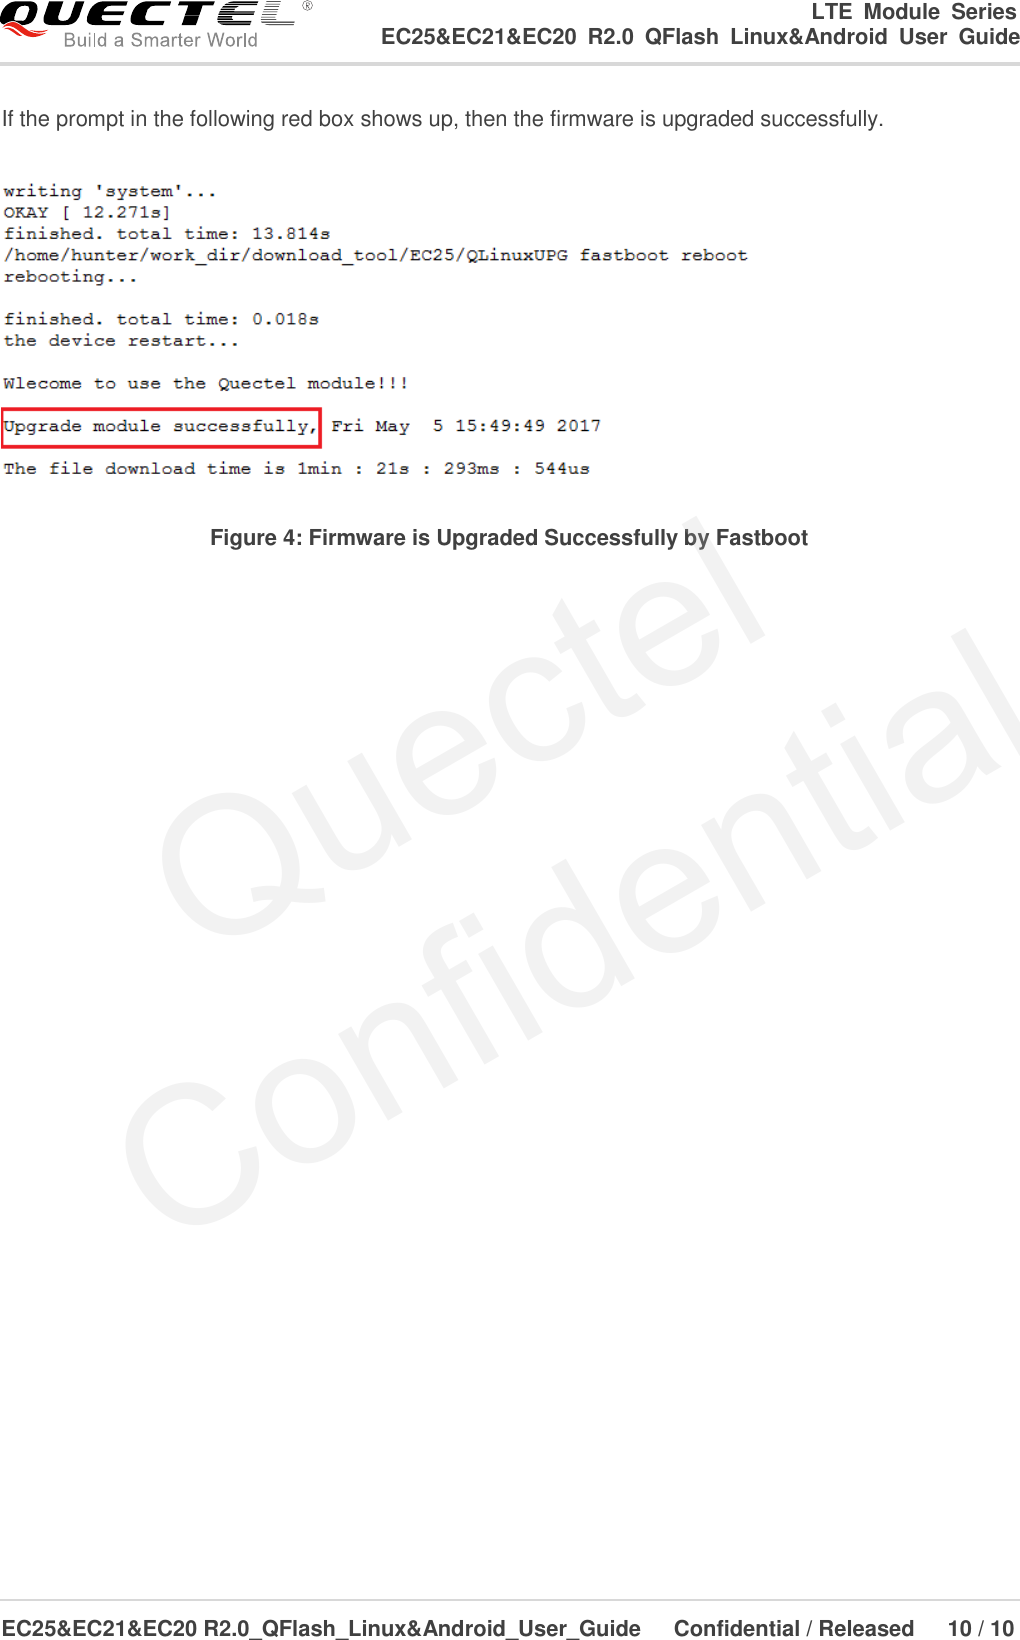 Page 11 of 11 - Quectel EC25&EC21&EC20 R2.0 QFlash Linux&Android User Guide V1.0